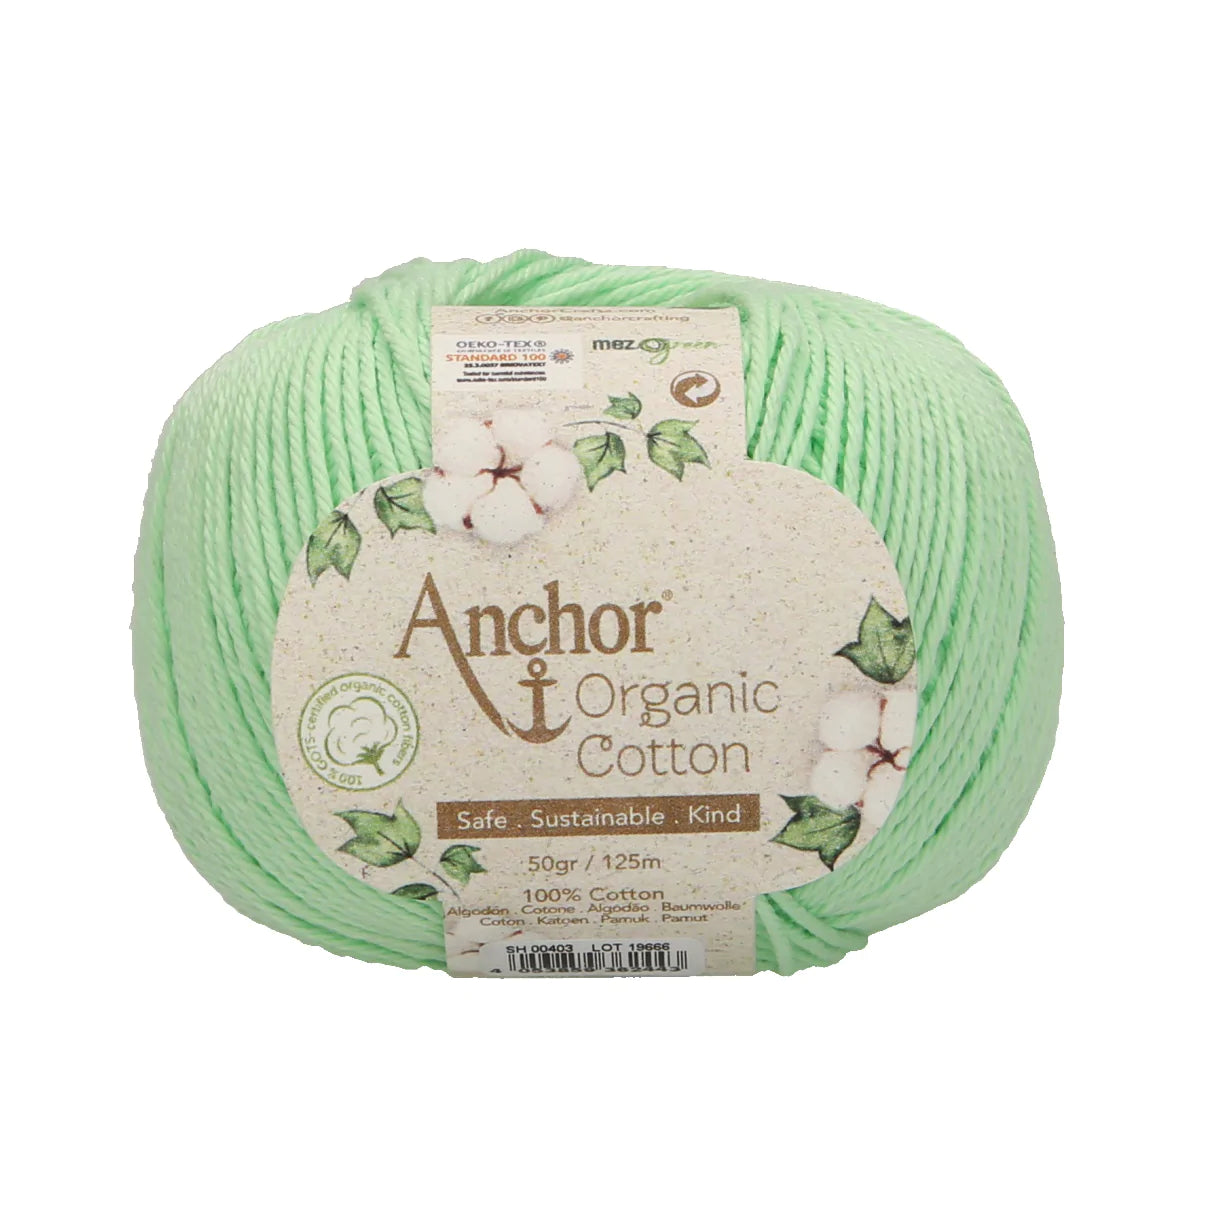 Anchor - Organic Cotton - 50g Ball - Aqua Wave Green